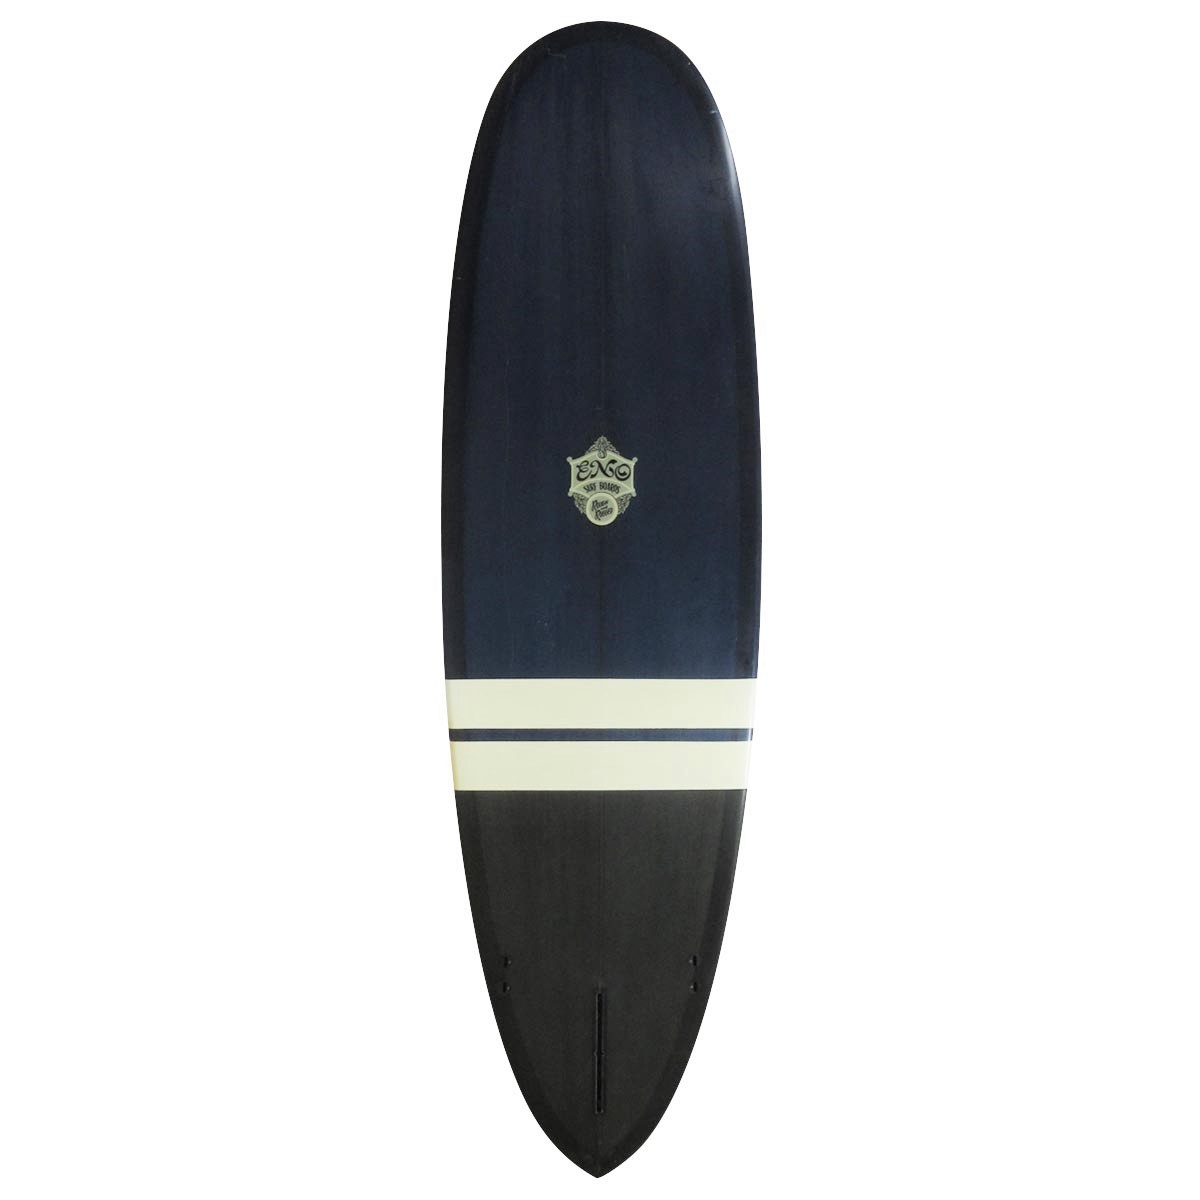 ENO SURFBOARDS / MINI NOSERIDER 7`2